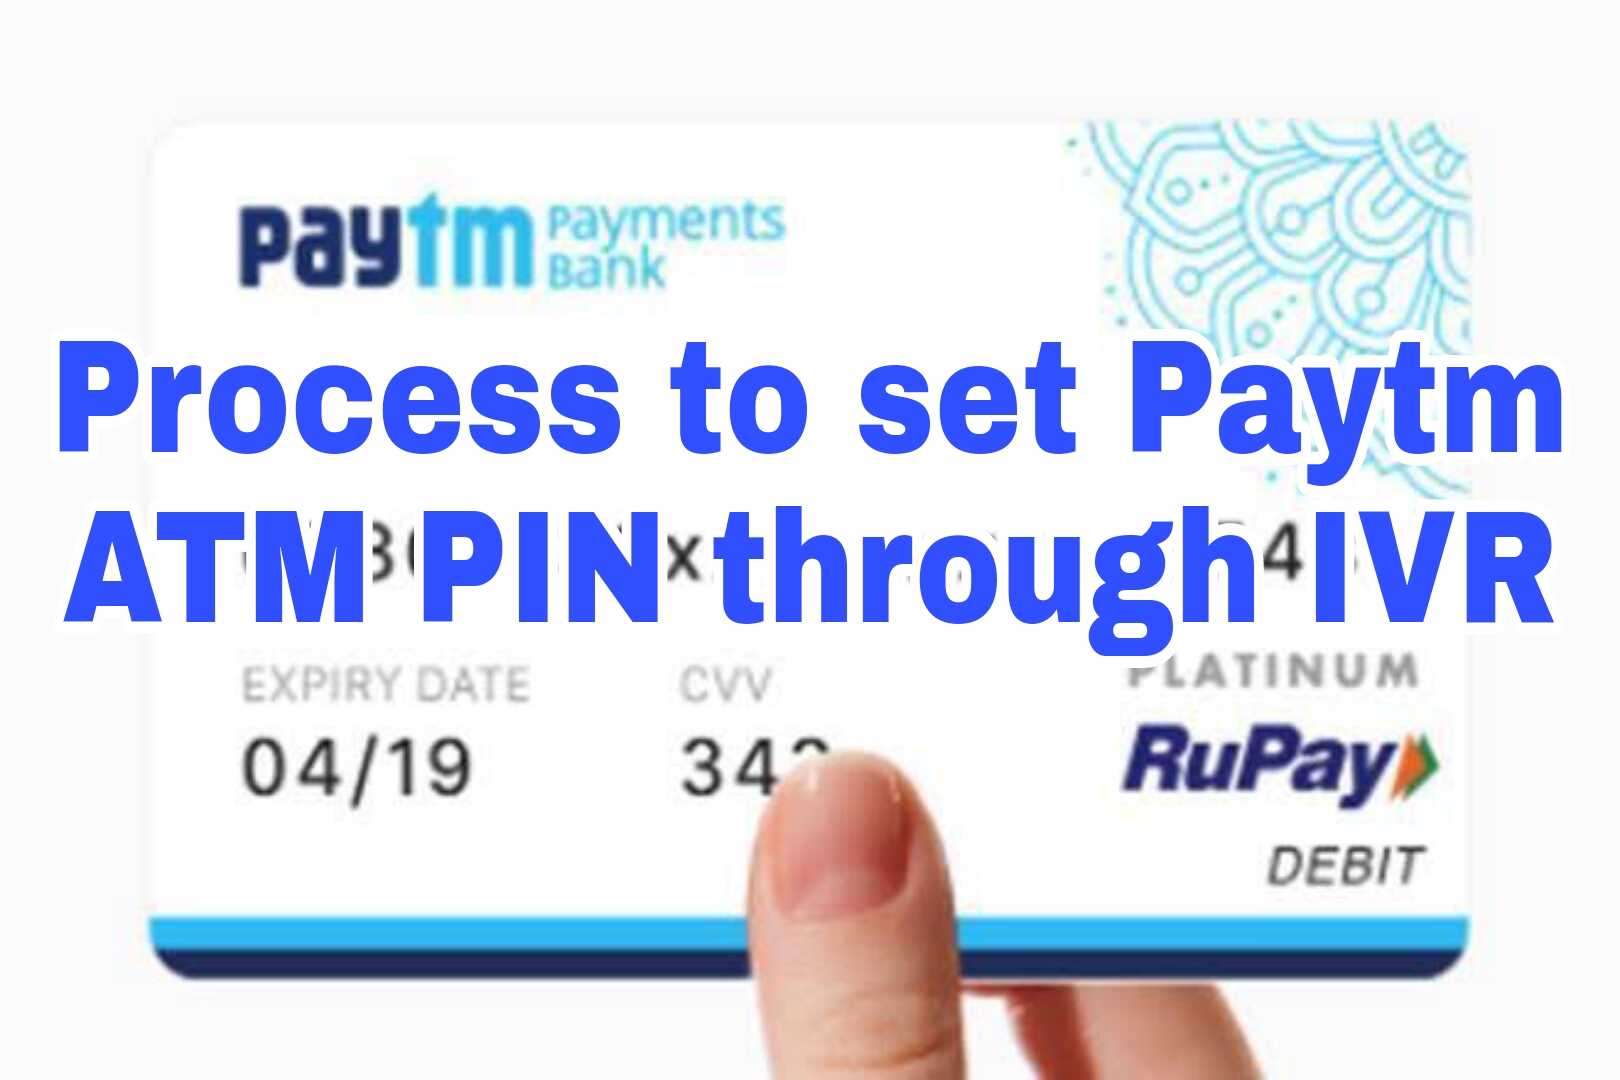 Process to set Paytm ATM PIN through IVR